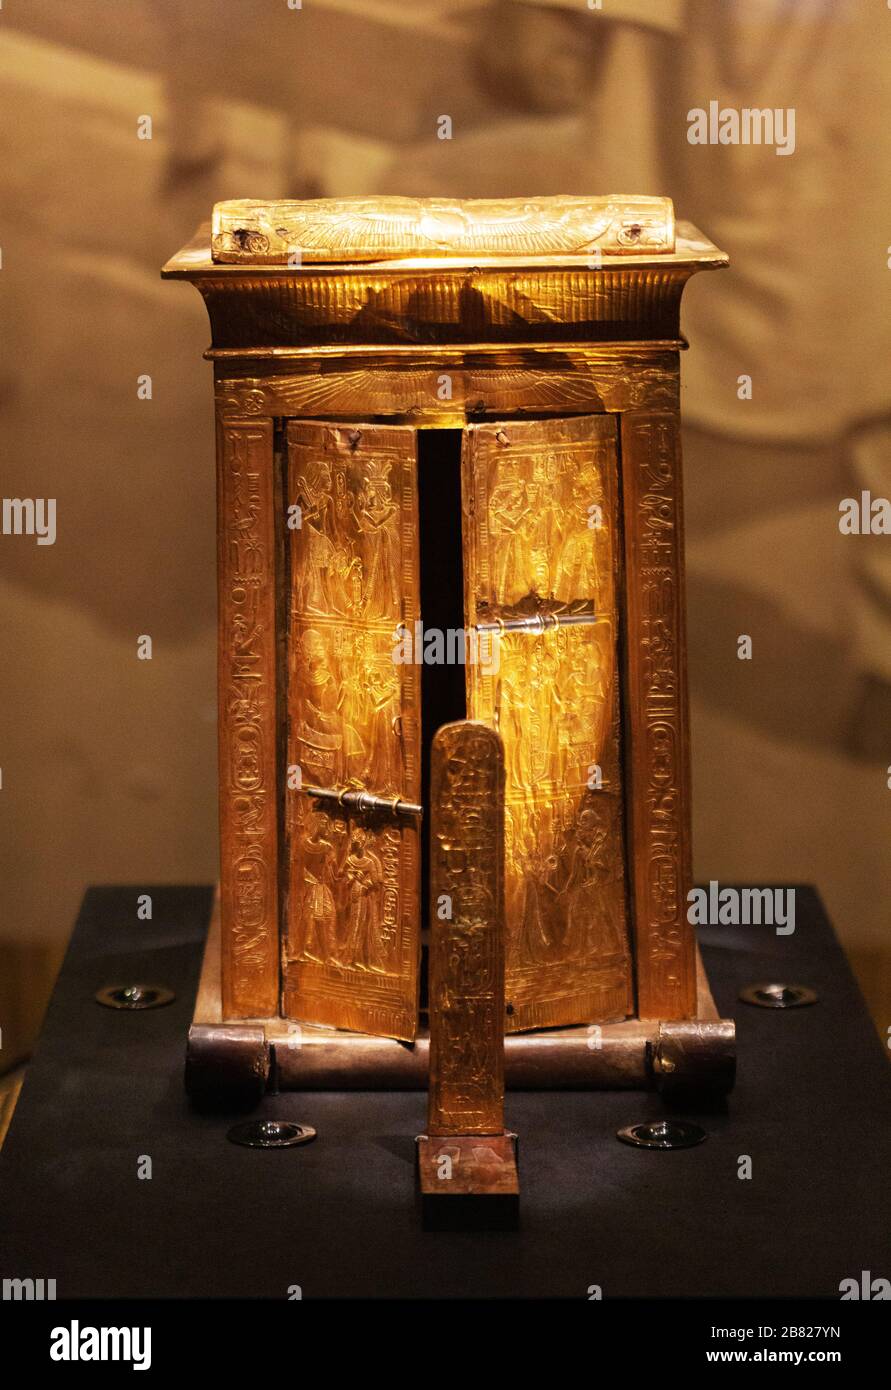 Tutankhamun tomb treasure; gilded wooden statue stand and statue shrine from Tutankhamuns tomb, Ancient egyptian treasures from ancient Egypt Stock Photo